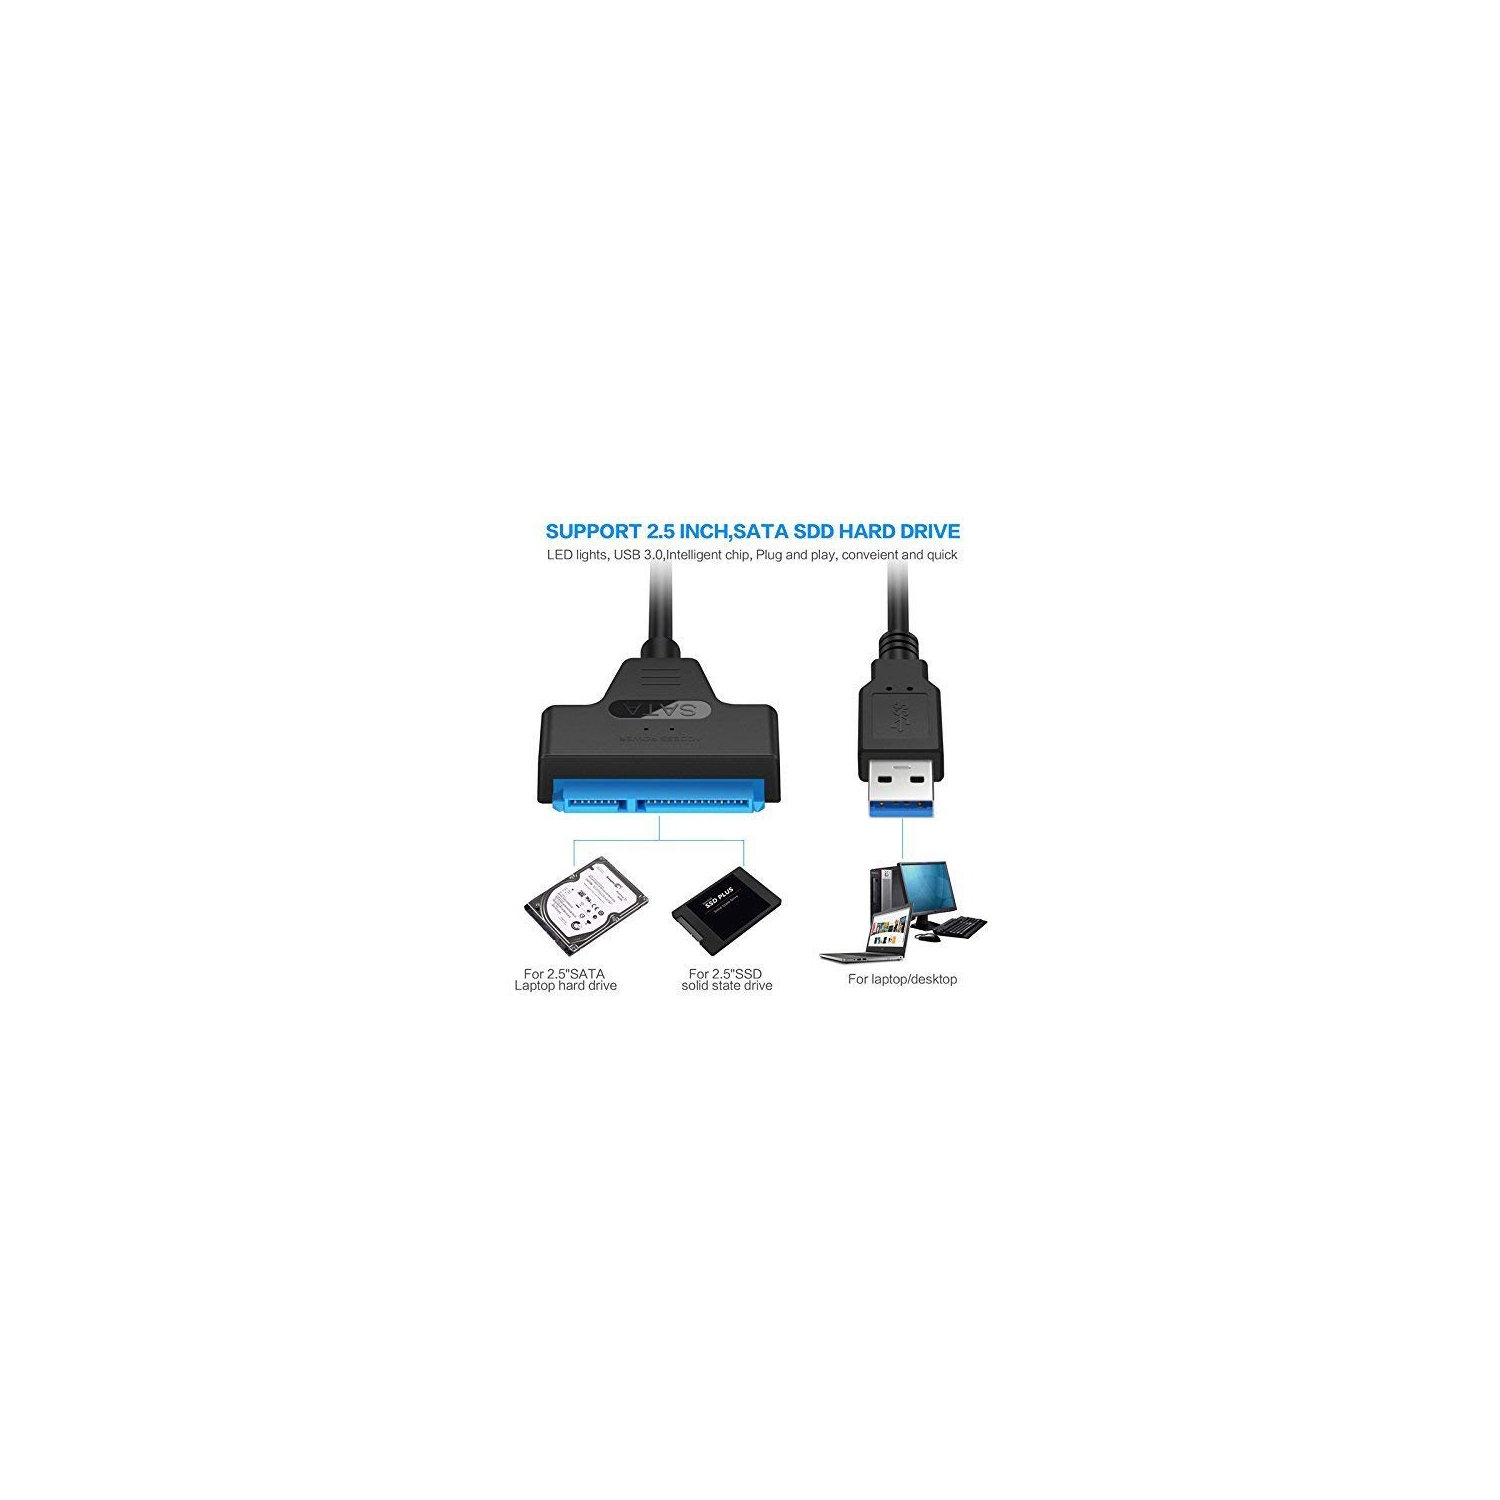 UniLink (TM) Câble adaptateur USB 3.0 vers SATA 22 broches SATA